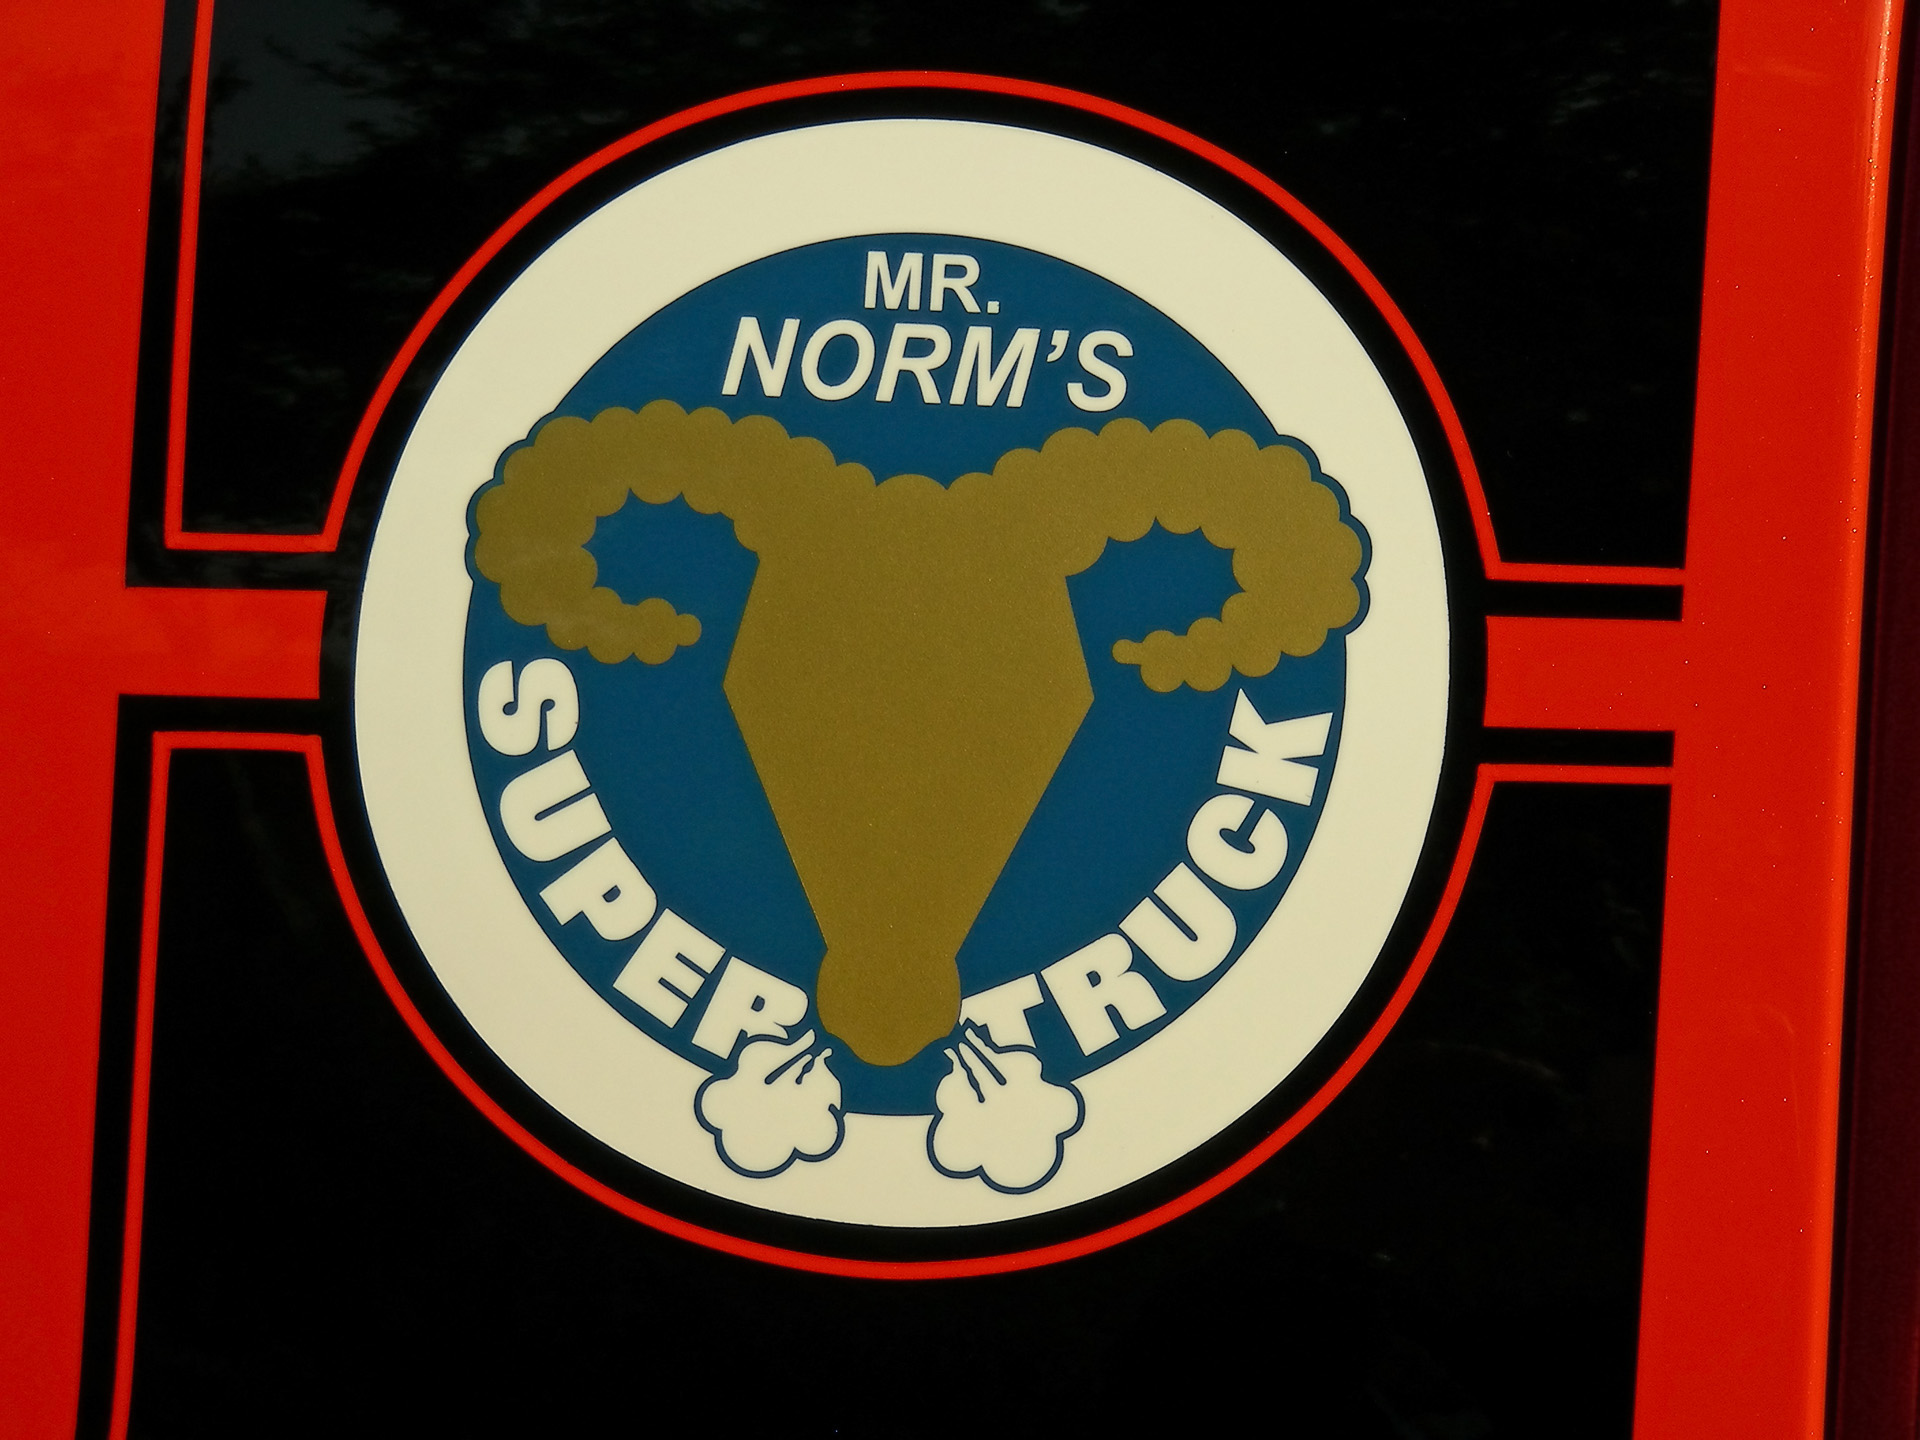  Norms Dodge Hemi Ram 1500 Super Truck   Logo   1920x1440   Wallpaper